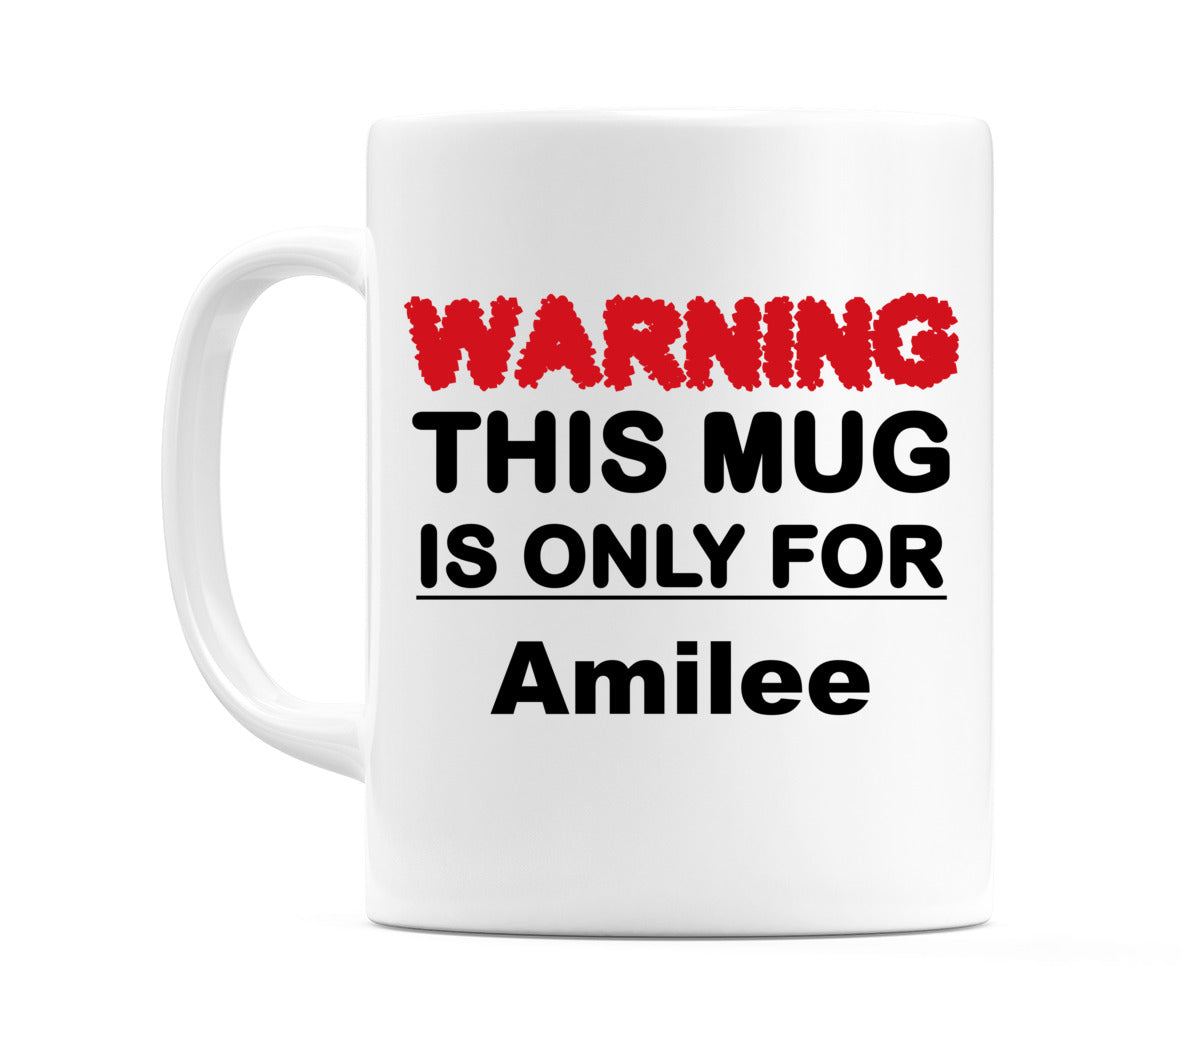 Warning This Mug is ONLY for Amilee Mug